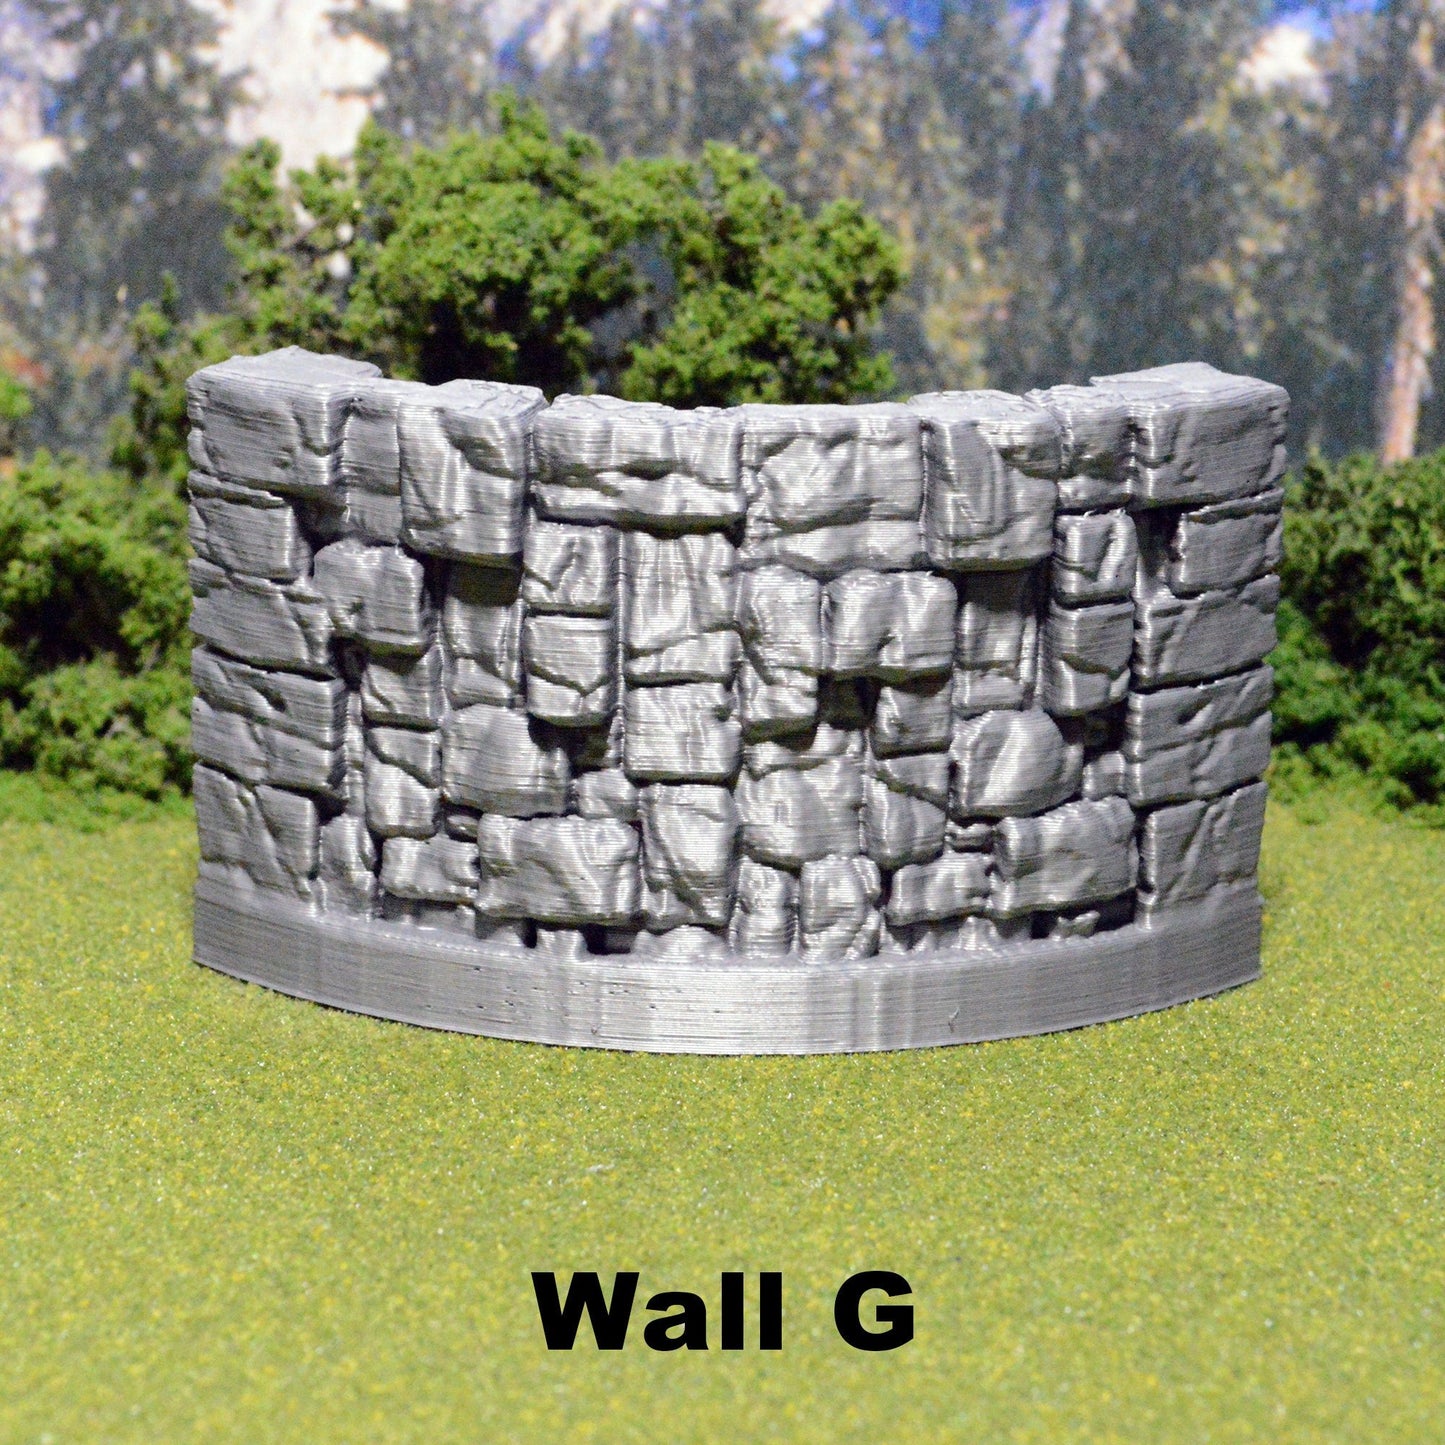 Heavy Stone Wall Tiles 28mm for D&D Terrain, Modular OpenLOCK Building Tiles, DnD Medieval Village Stone Wall Tiles